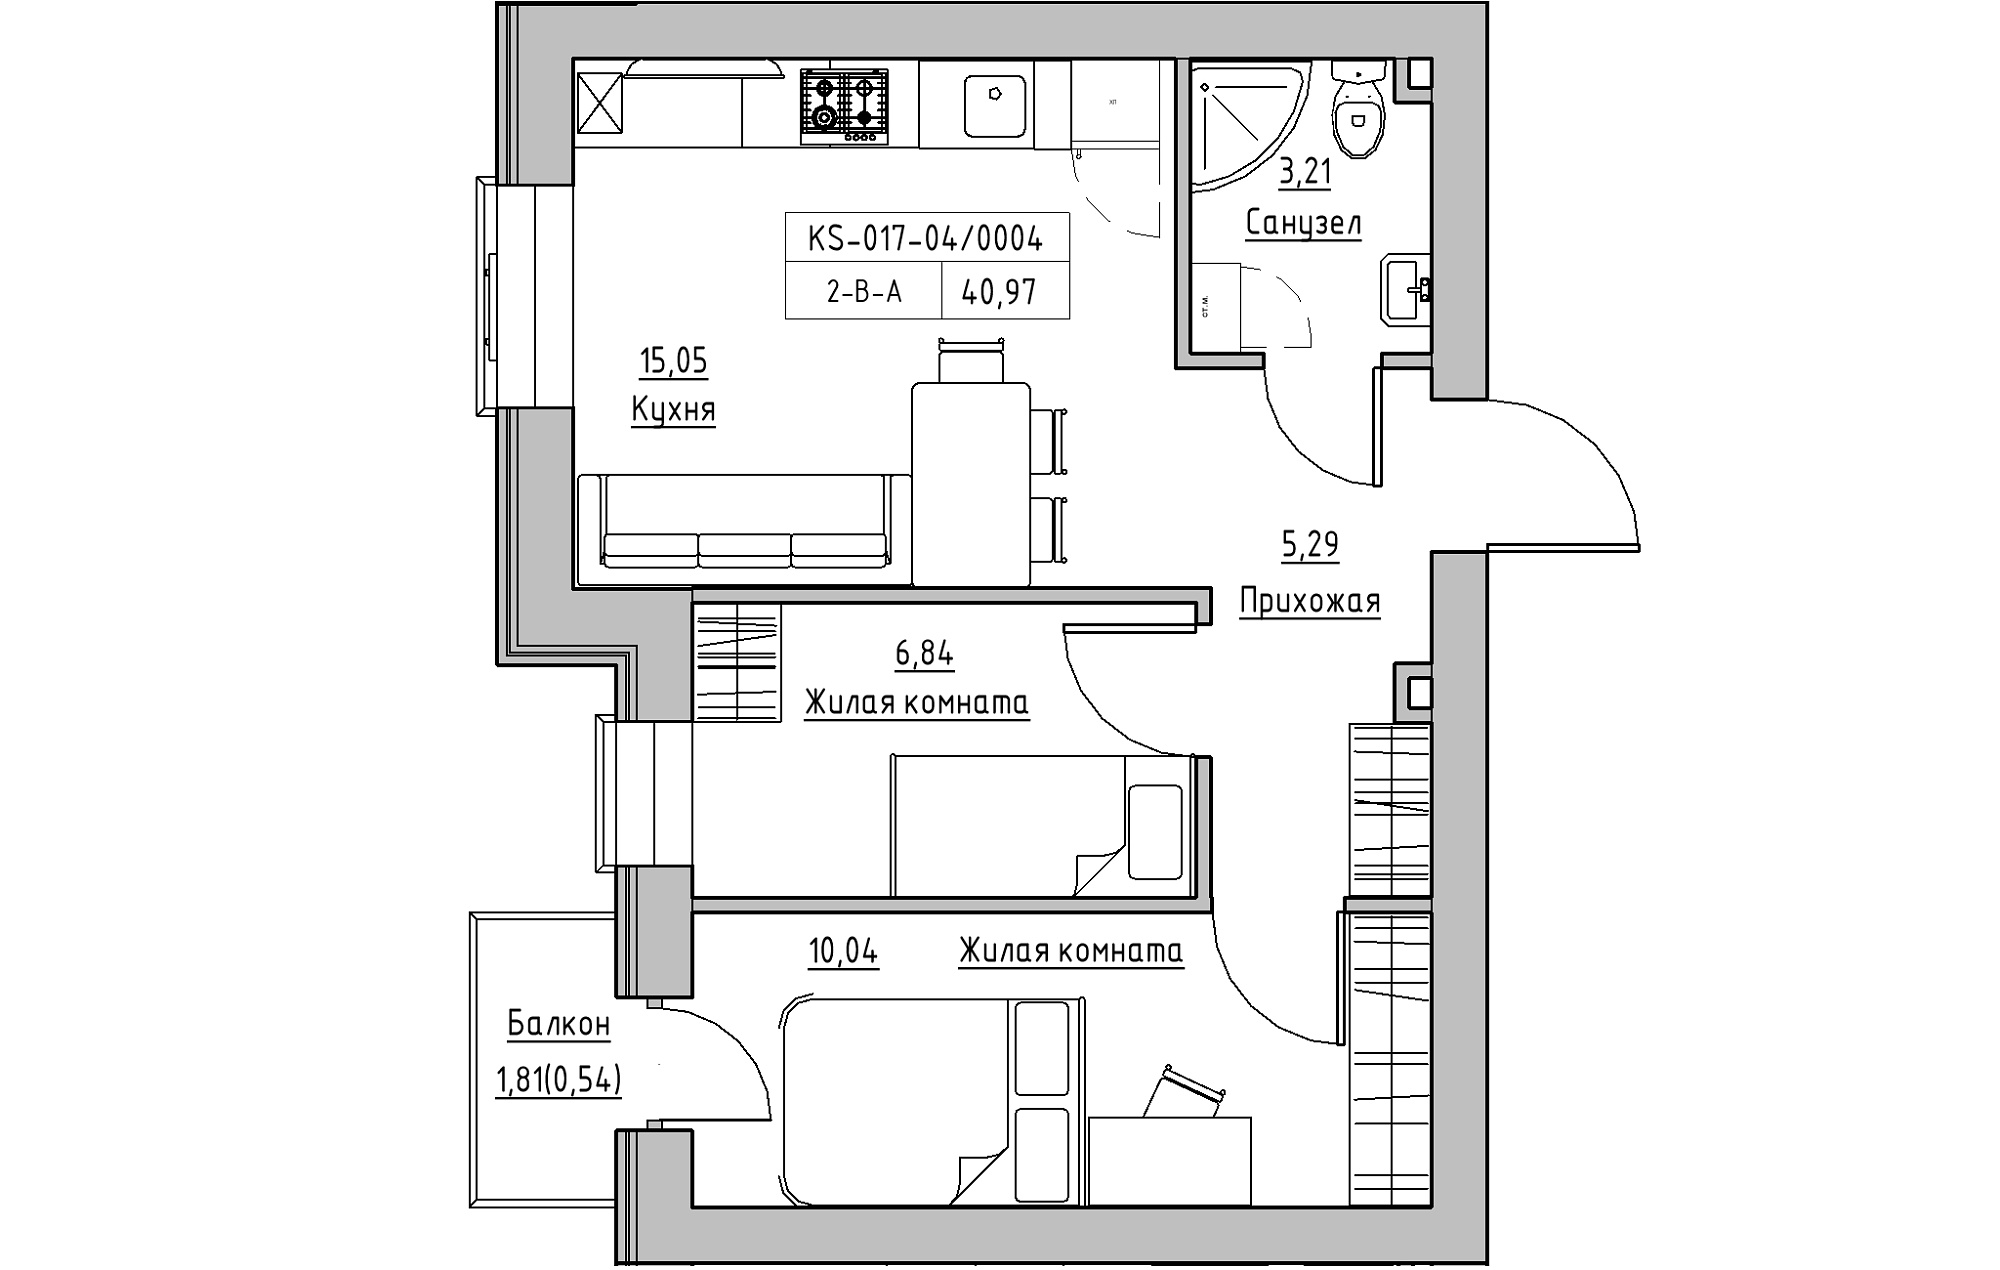 Planning 2-rm flats area 40.97m2, KS-017-04/0004.